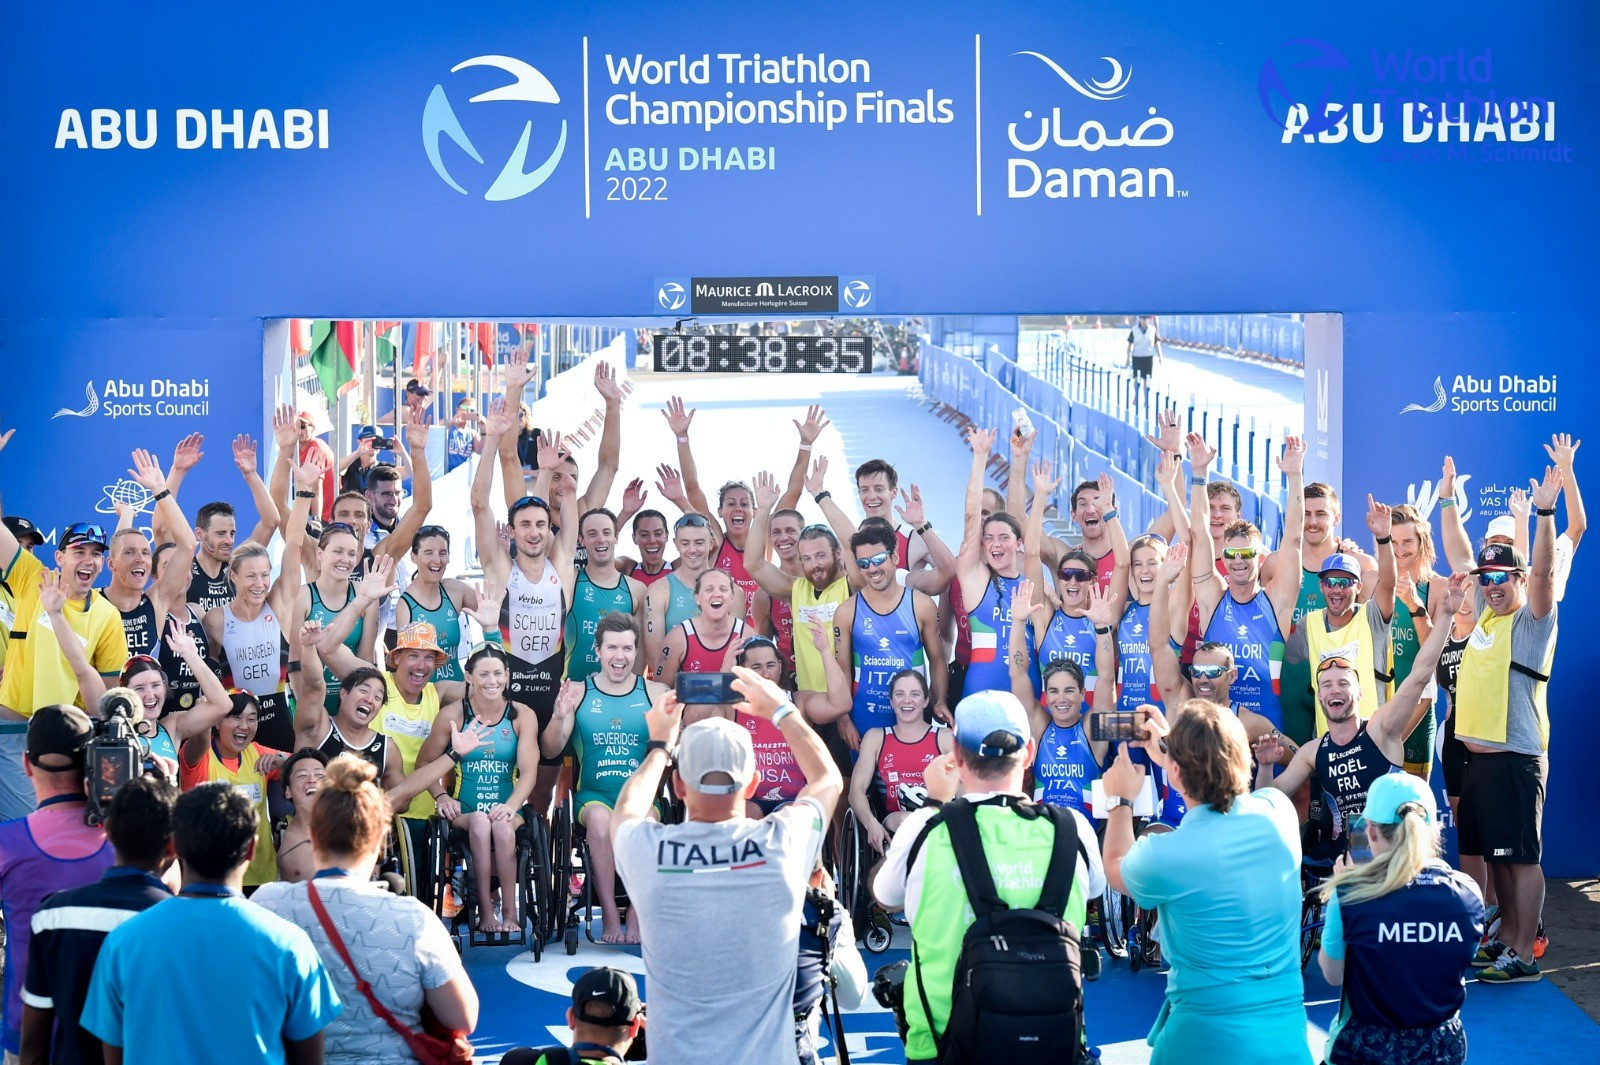 World Triathlon's inaugural Para triathlon mixed relay was billed as "making history" ©World Triathlon